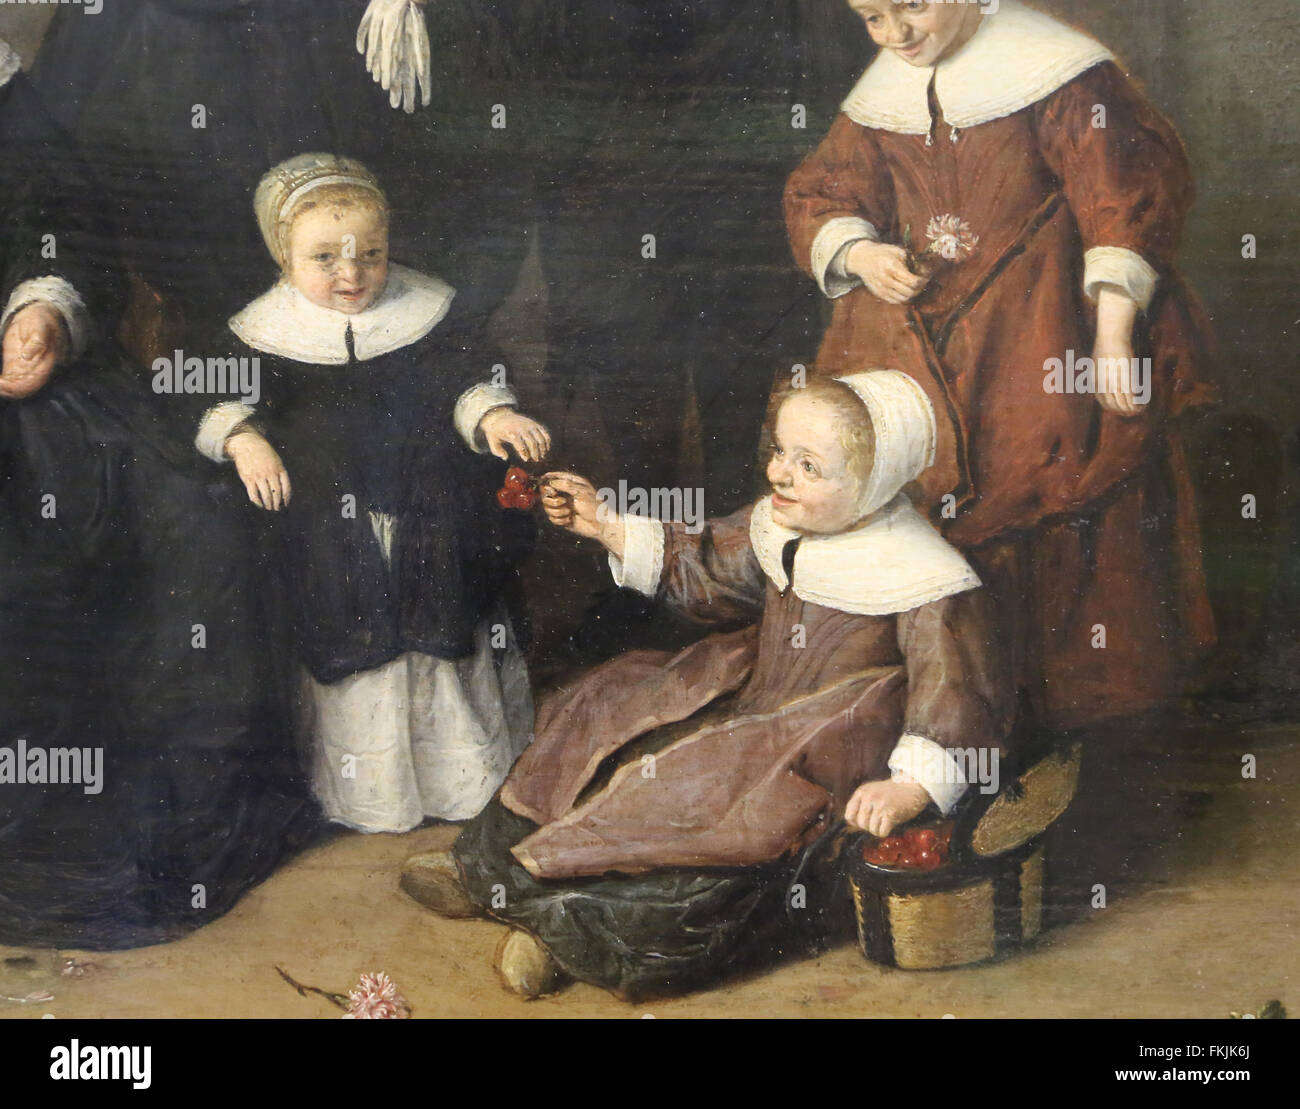 Adriaen van Ostade (1610-1685). Familienporträt, 1654. Detail. Louvre-Museum. Paris. Frankreich. Stockfoto